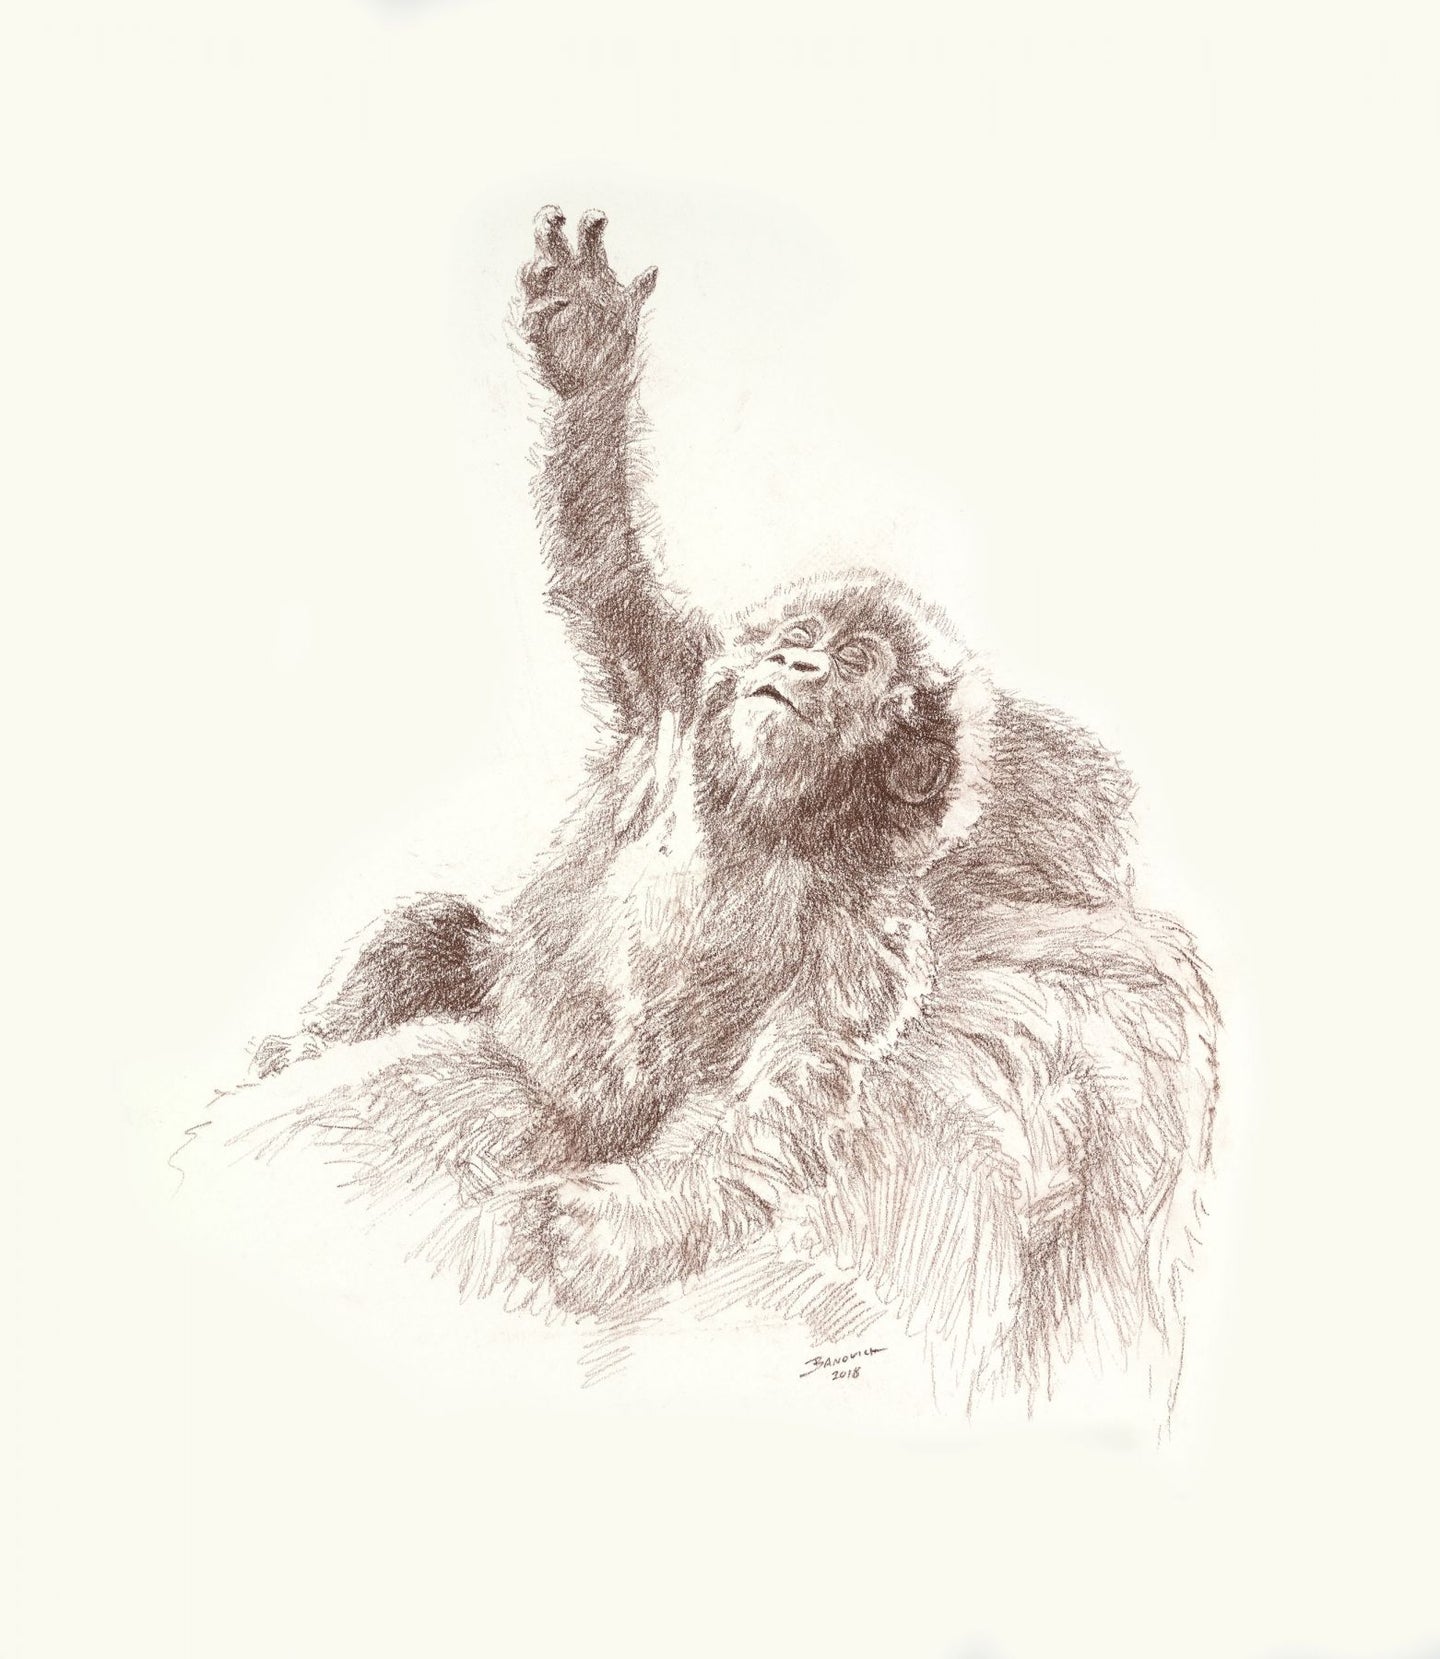 Young Gorilla-Original